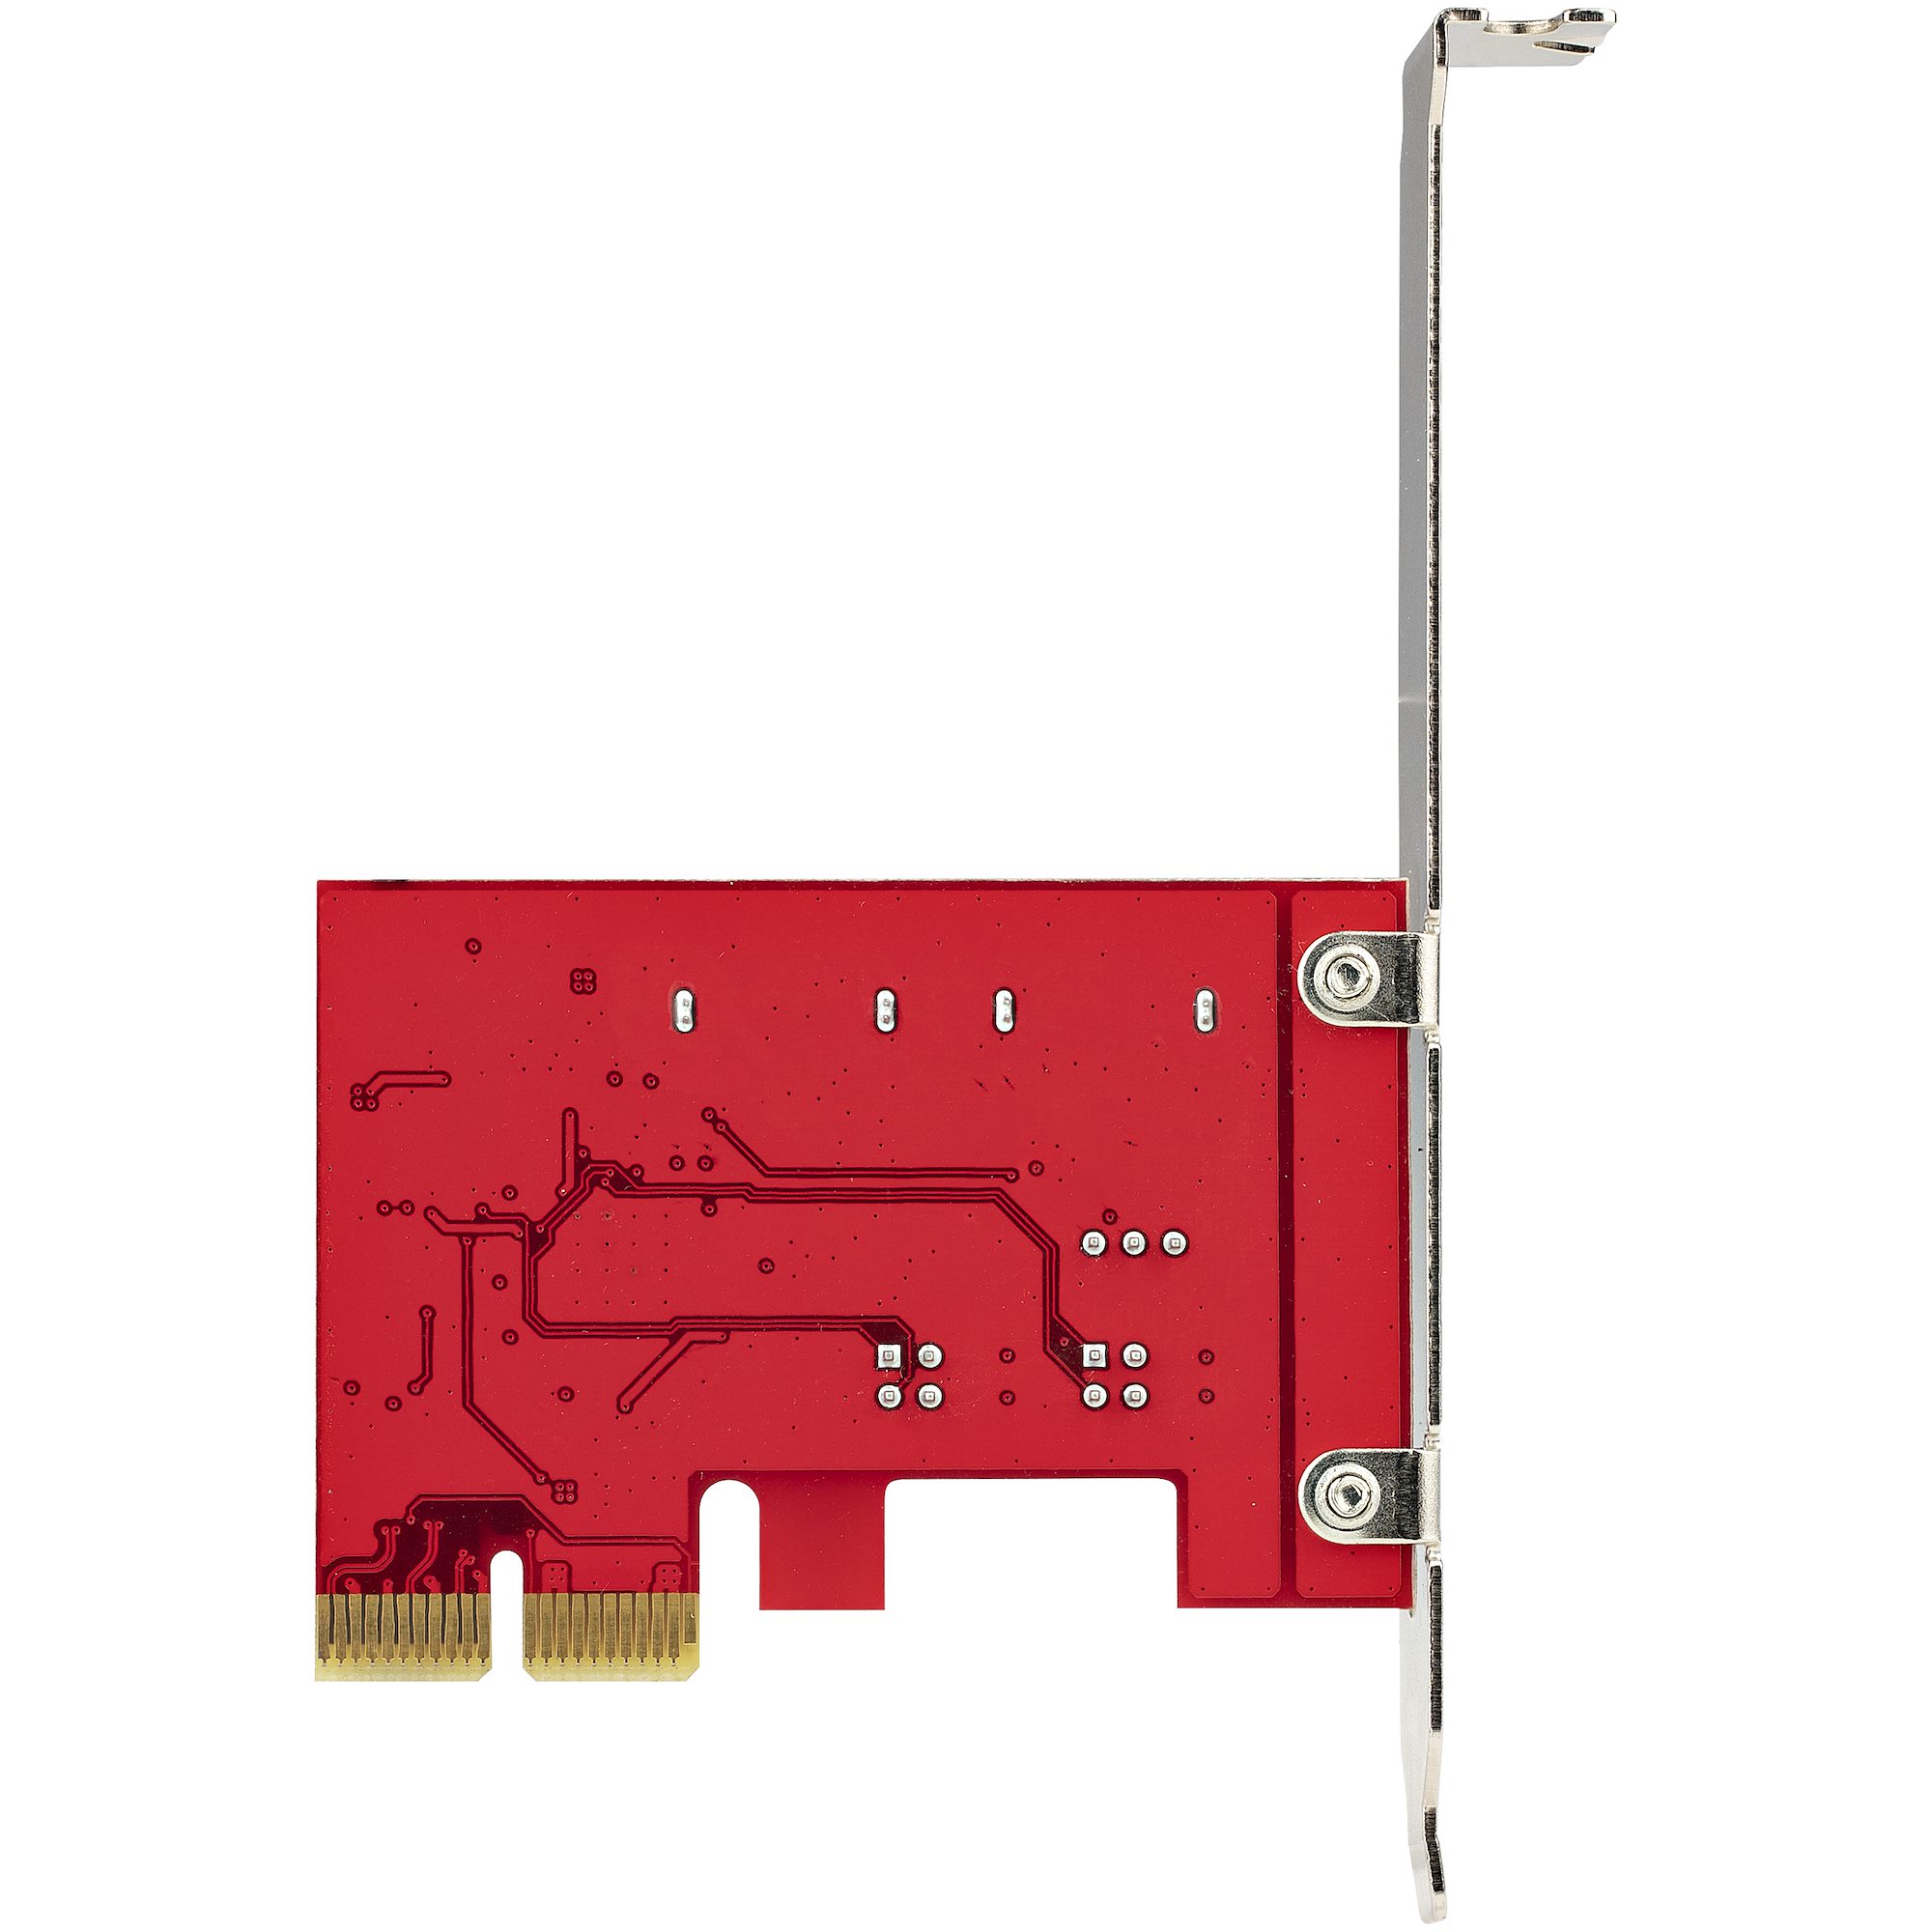 SATA PCIe Card - 2 Port PCIe SATA Expansion Card - 6Gbps - Full/Low Profile  - PCI Express to SATA Adapter/Controller - ASM1062R SATA RAID - PCIe to 